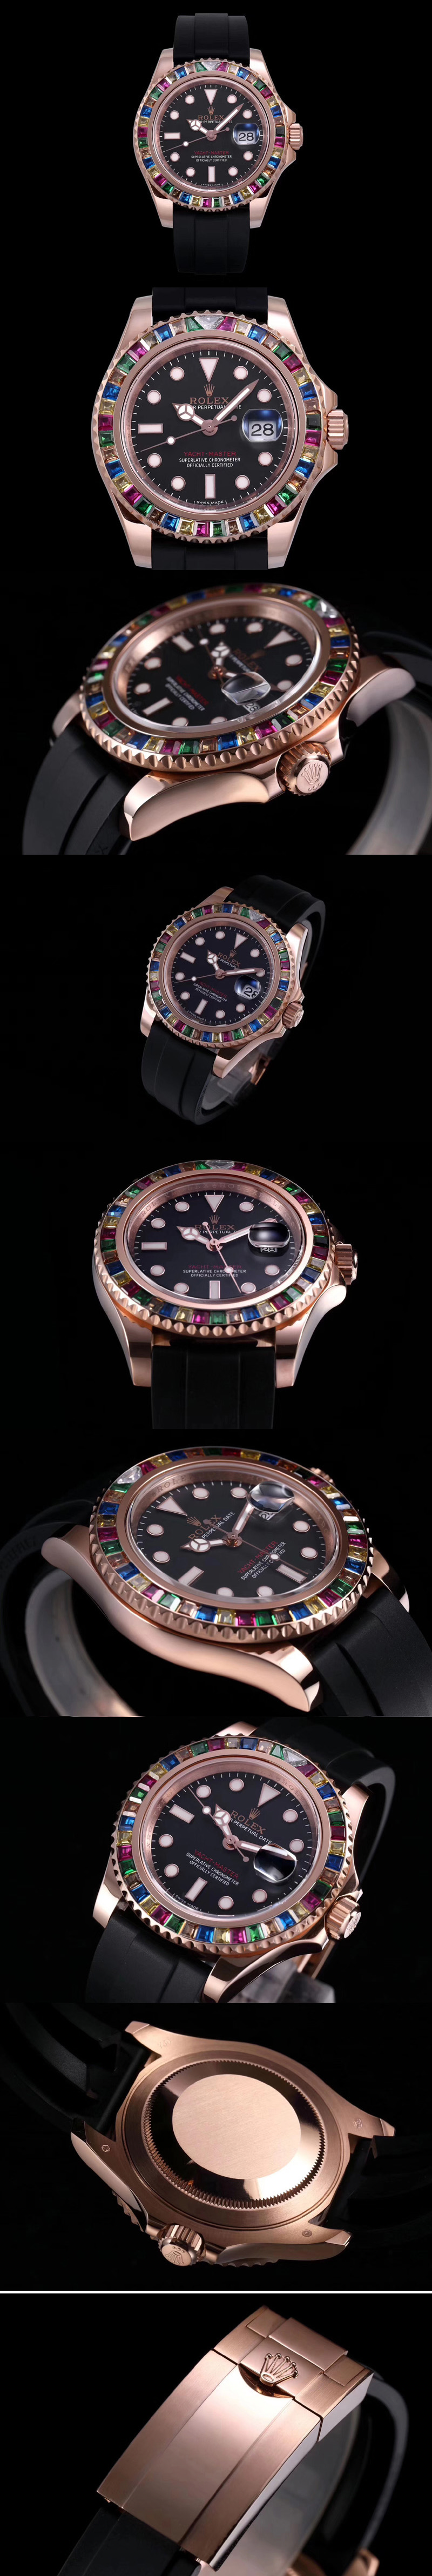 Replica Rolex Yacht-Master Watches